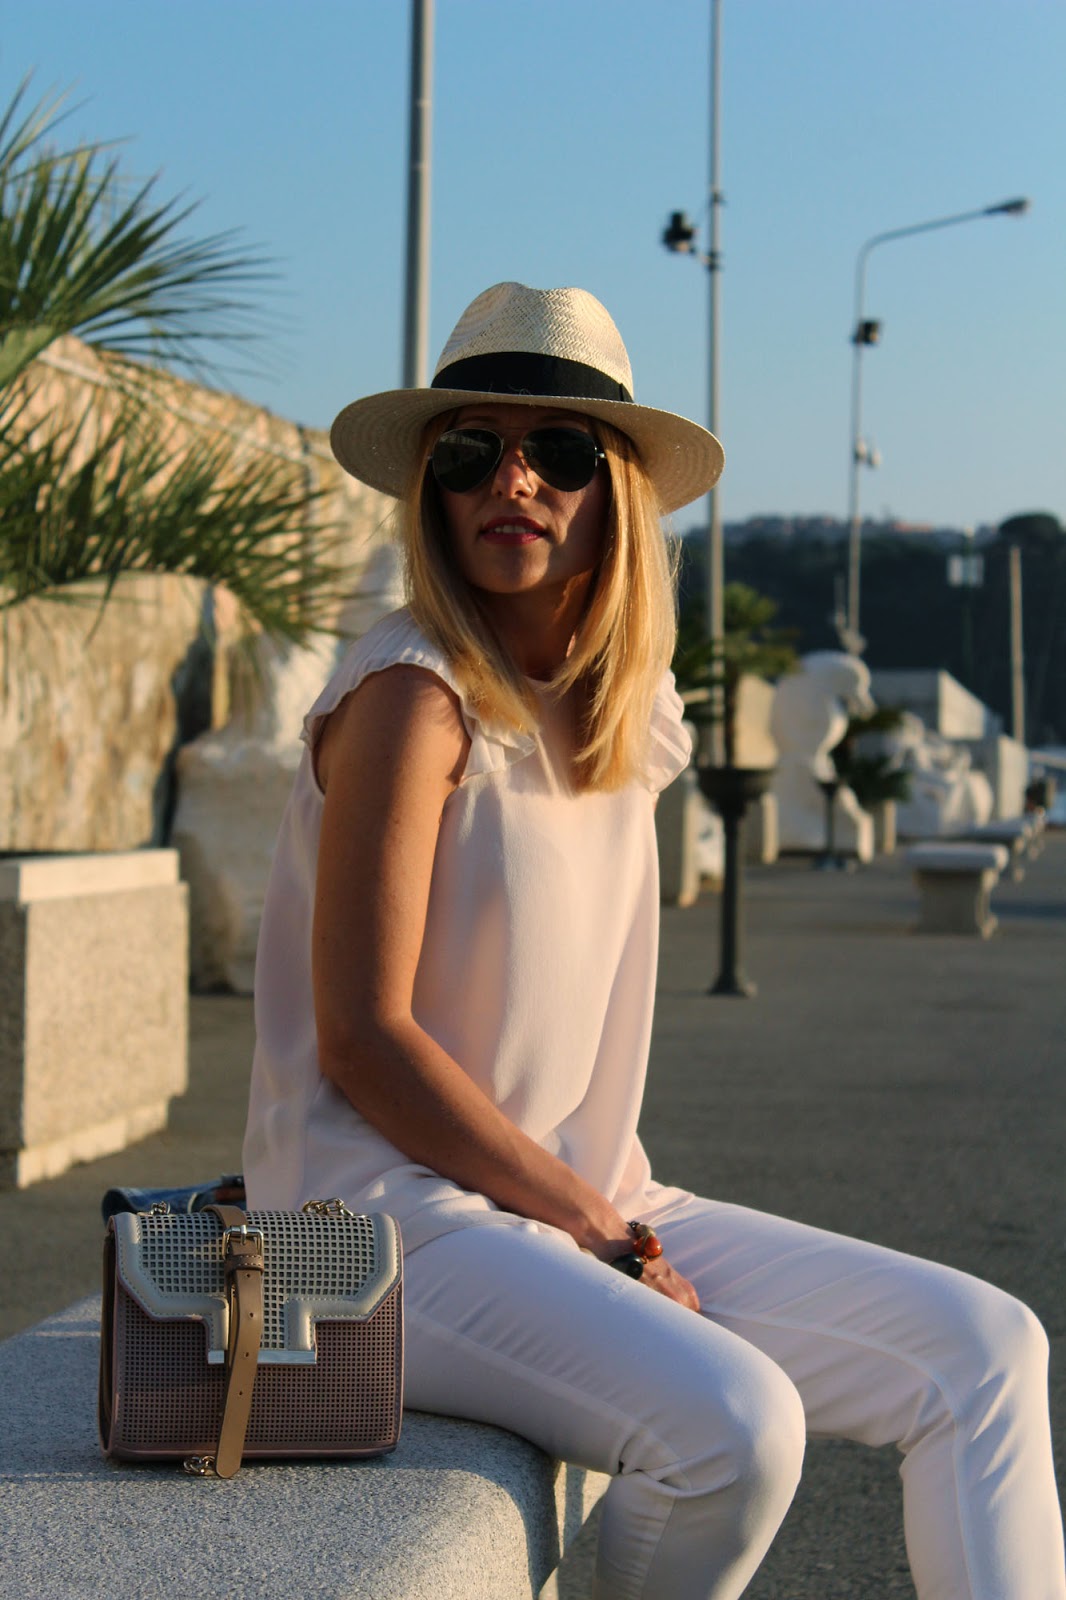 Eniwhere Fashion - Elba Porto Azzurro - Skinny jeans white and Panama Hat